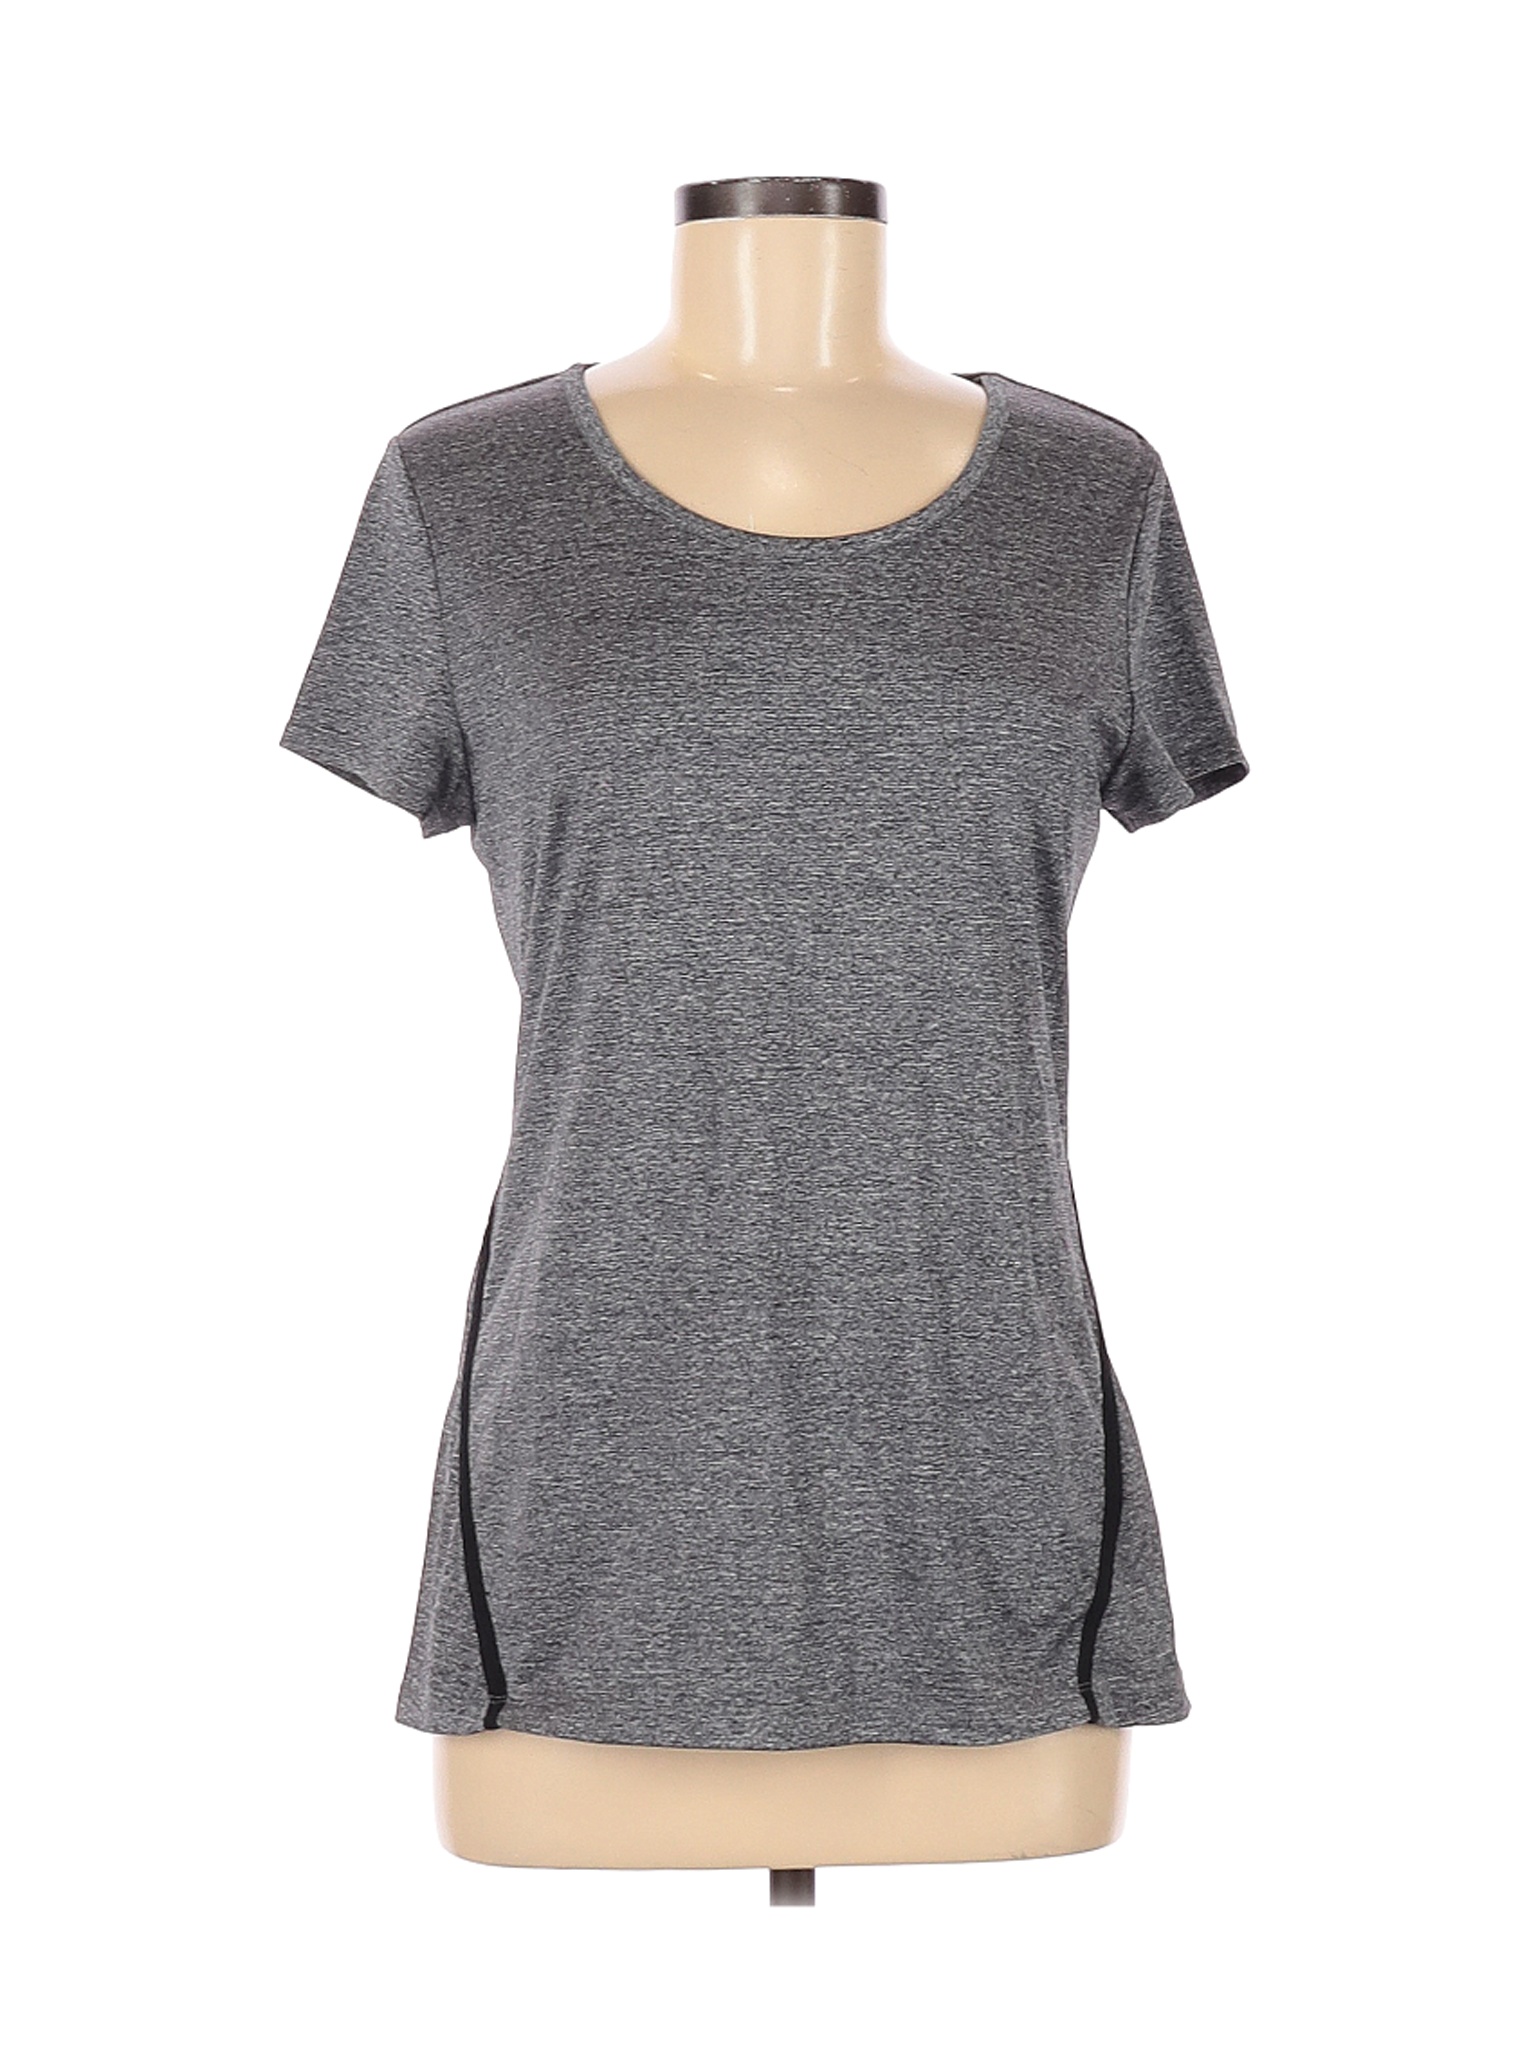 Mondetta Women Gray Active T-Shirt M | eBay